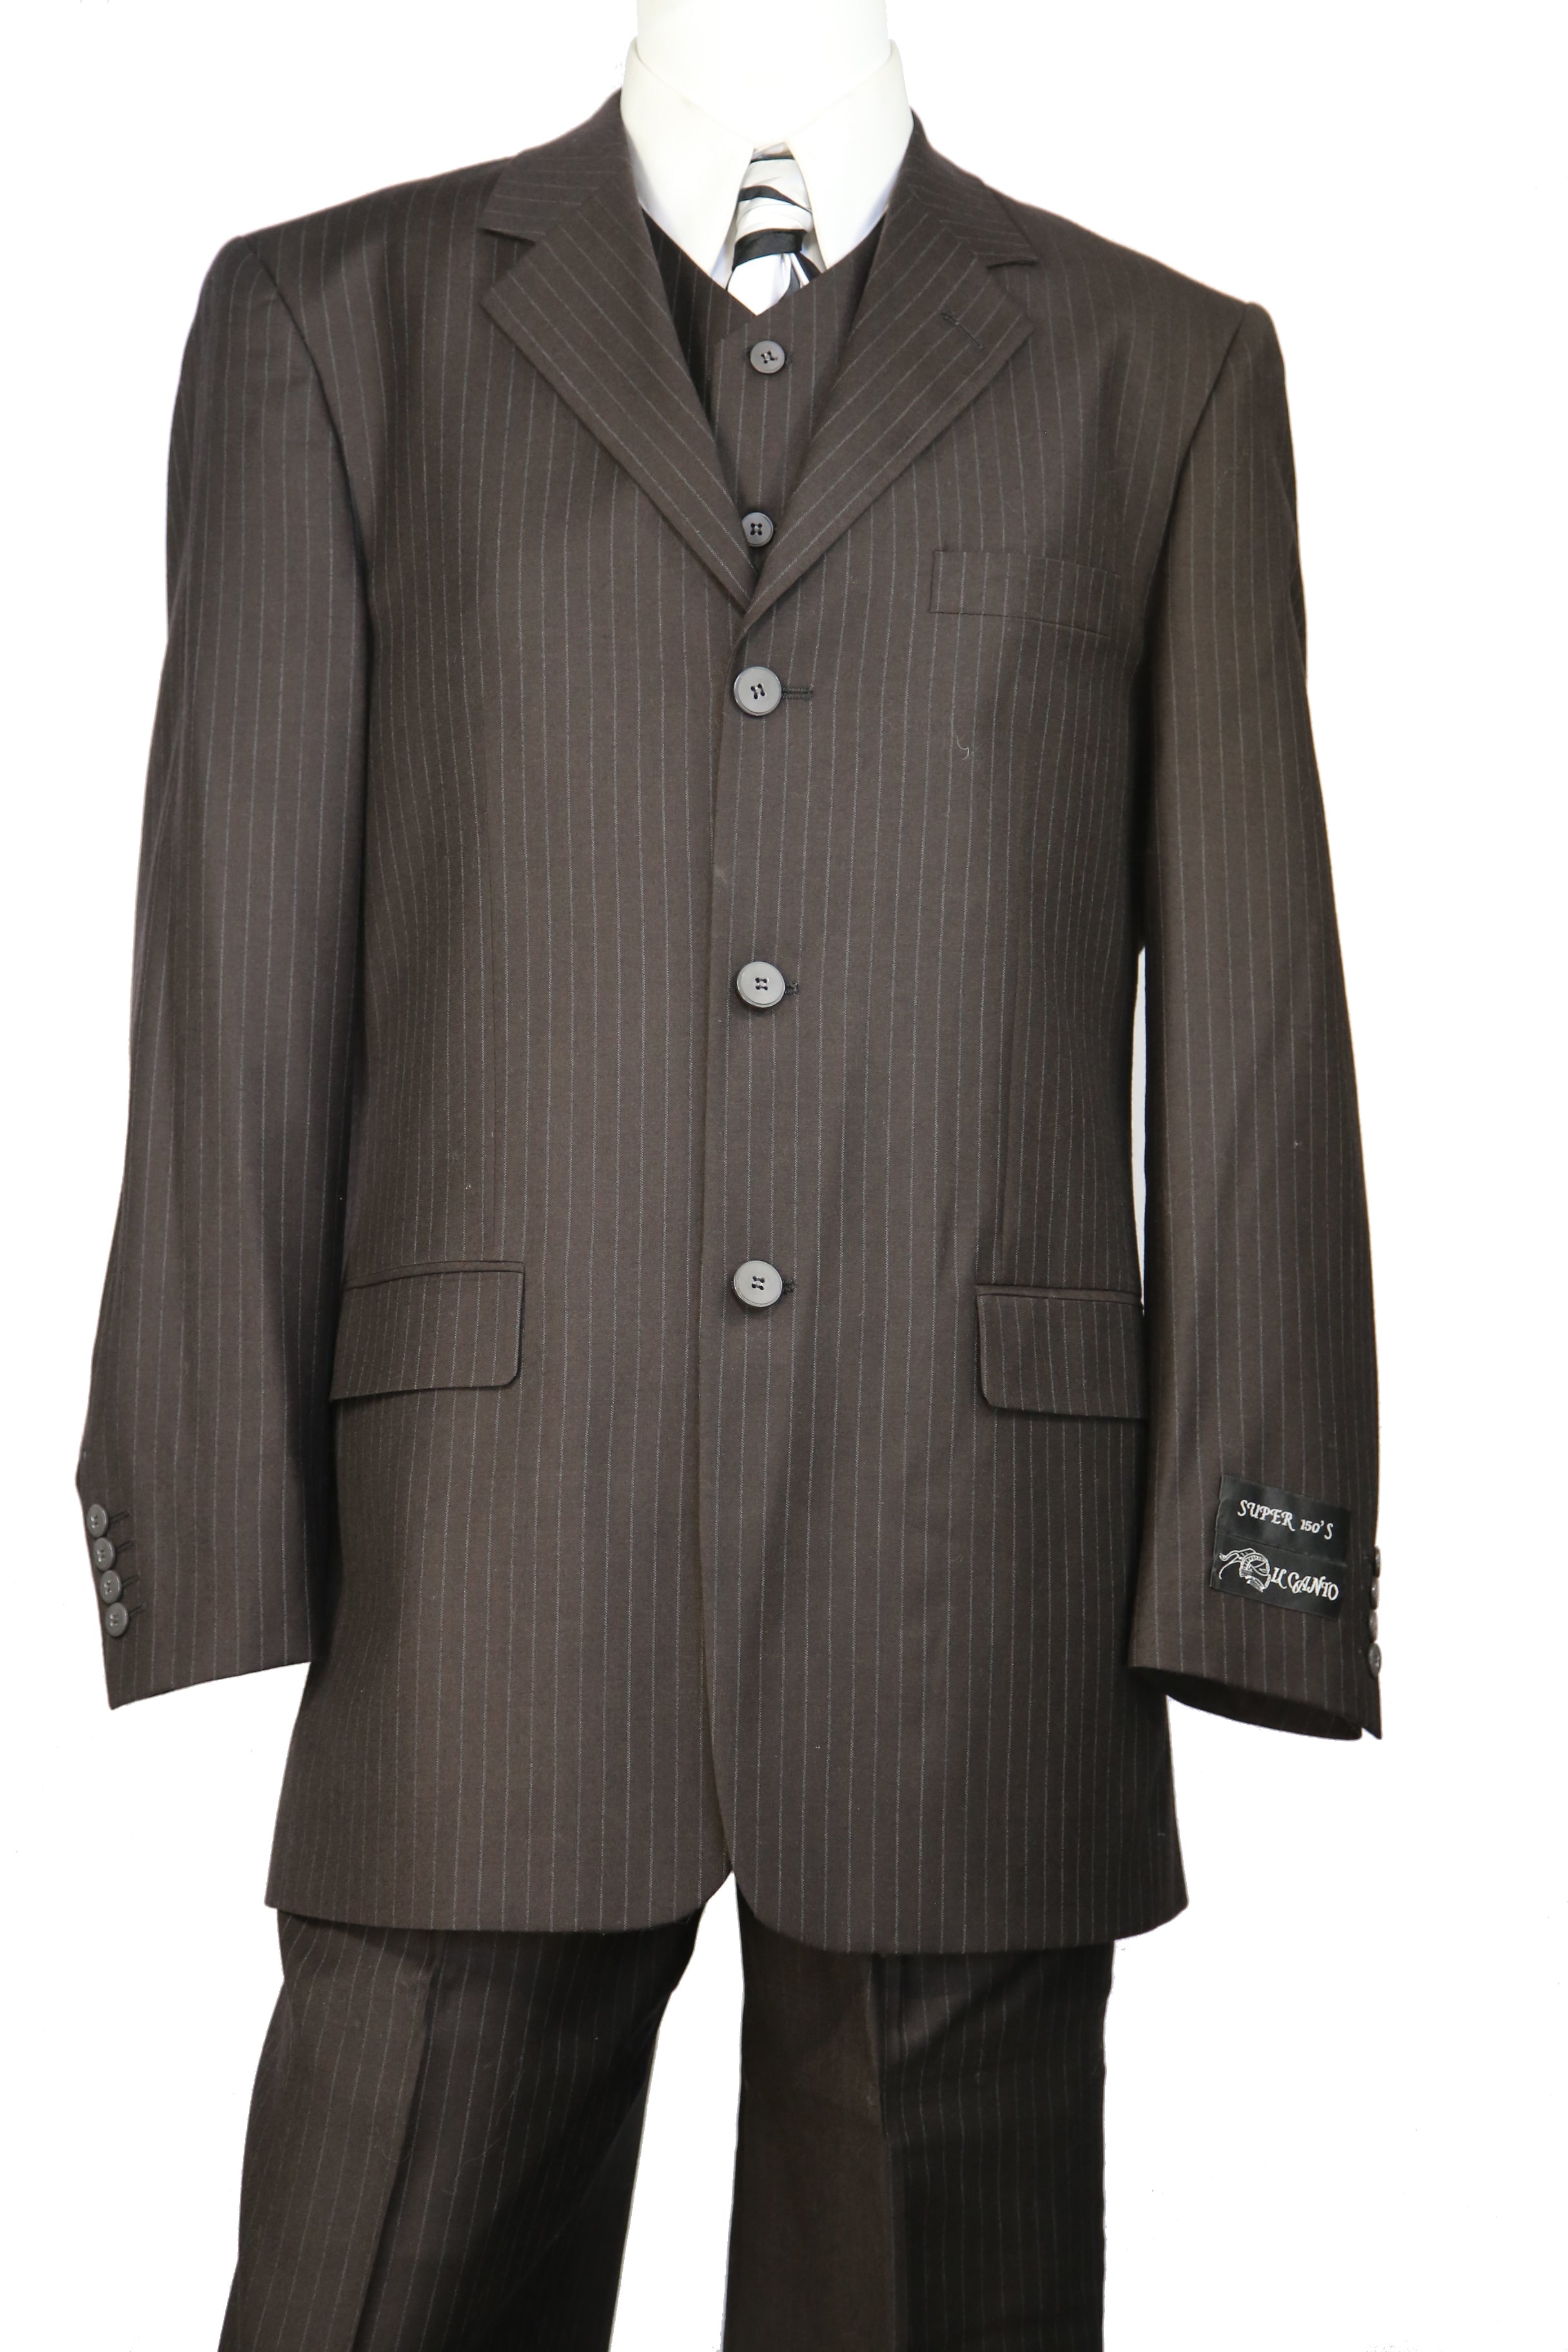 Duffel Textured  3pc  Zoot Suit Set